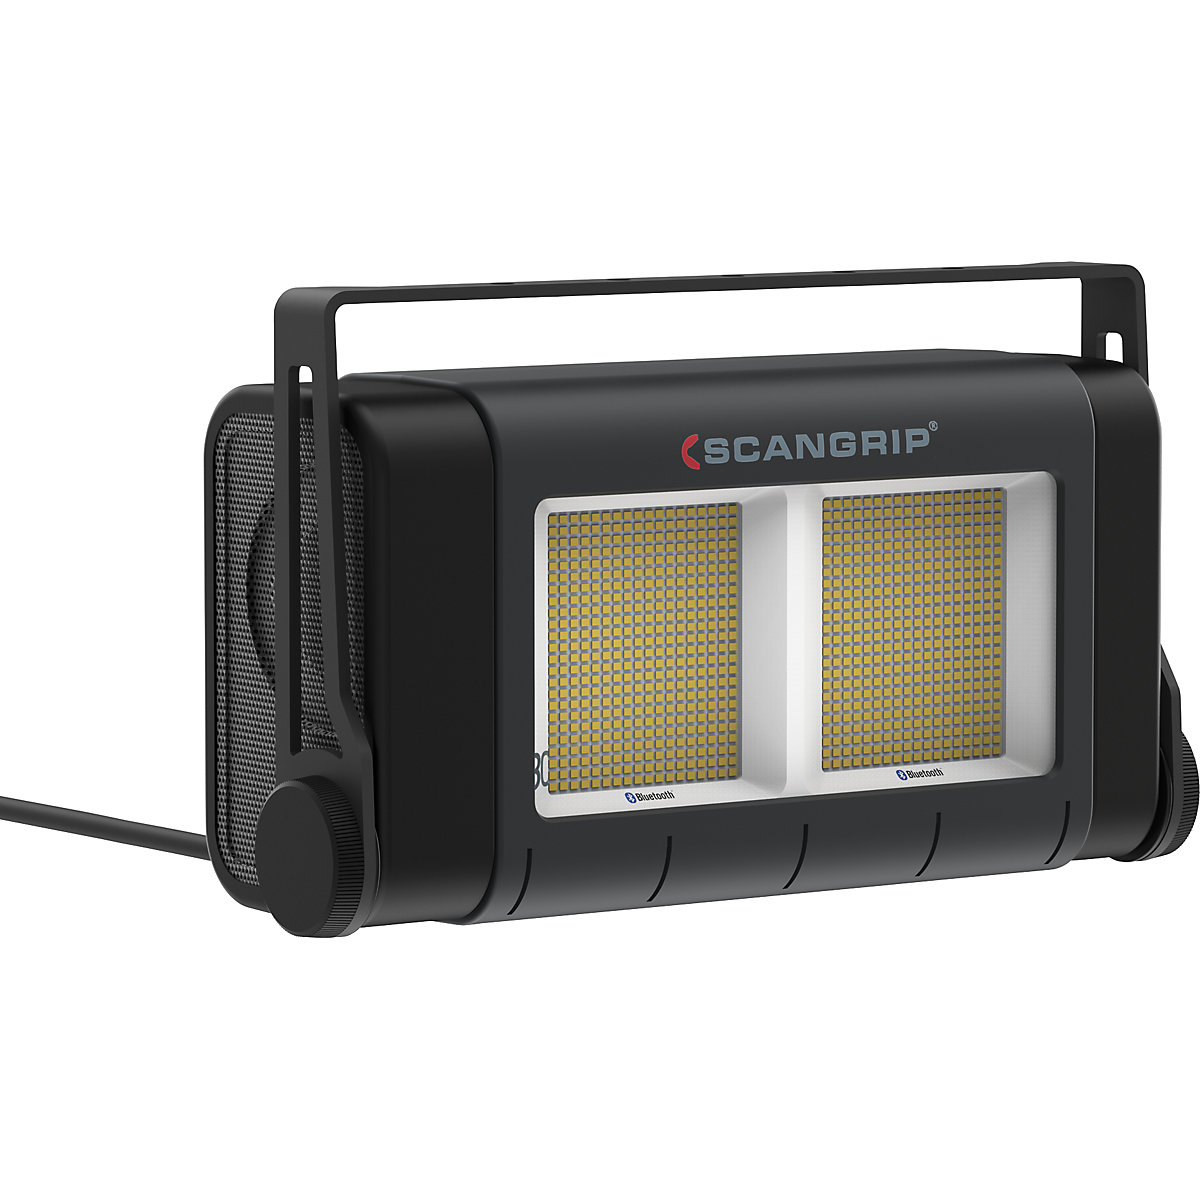 LED reflektor pro staveniště SITE LIGHT 80 – SCANGRIP